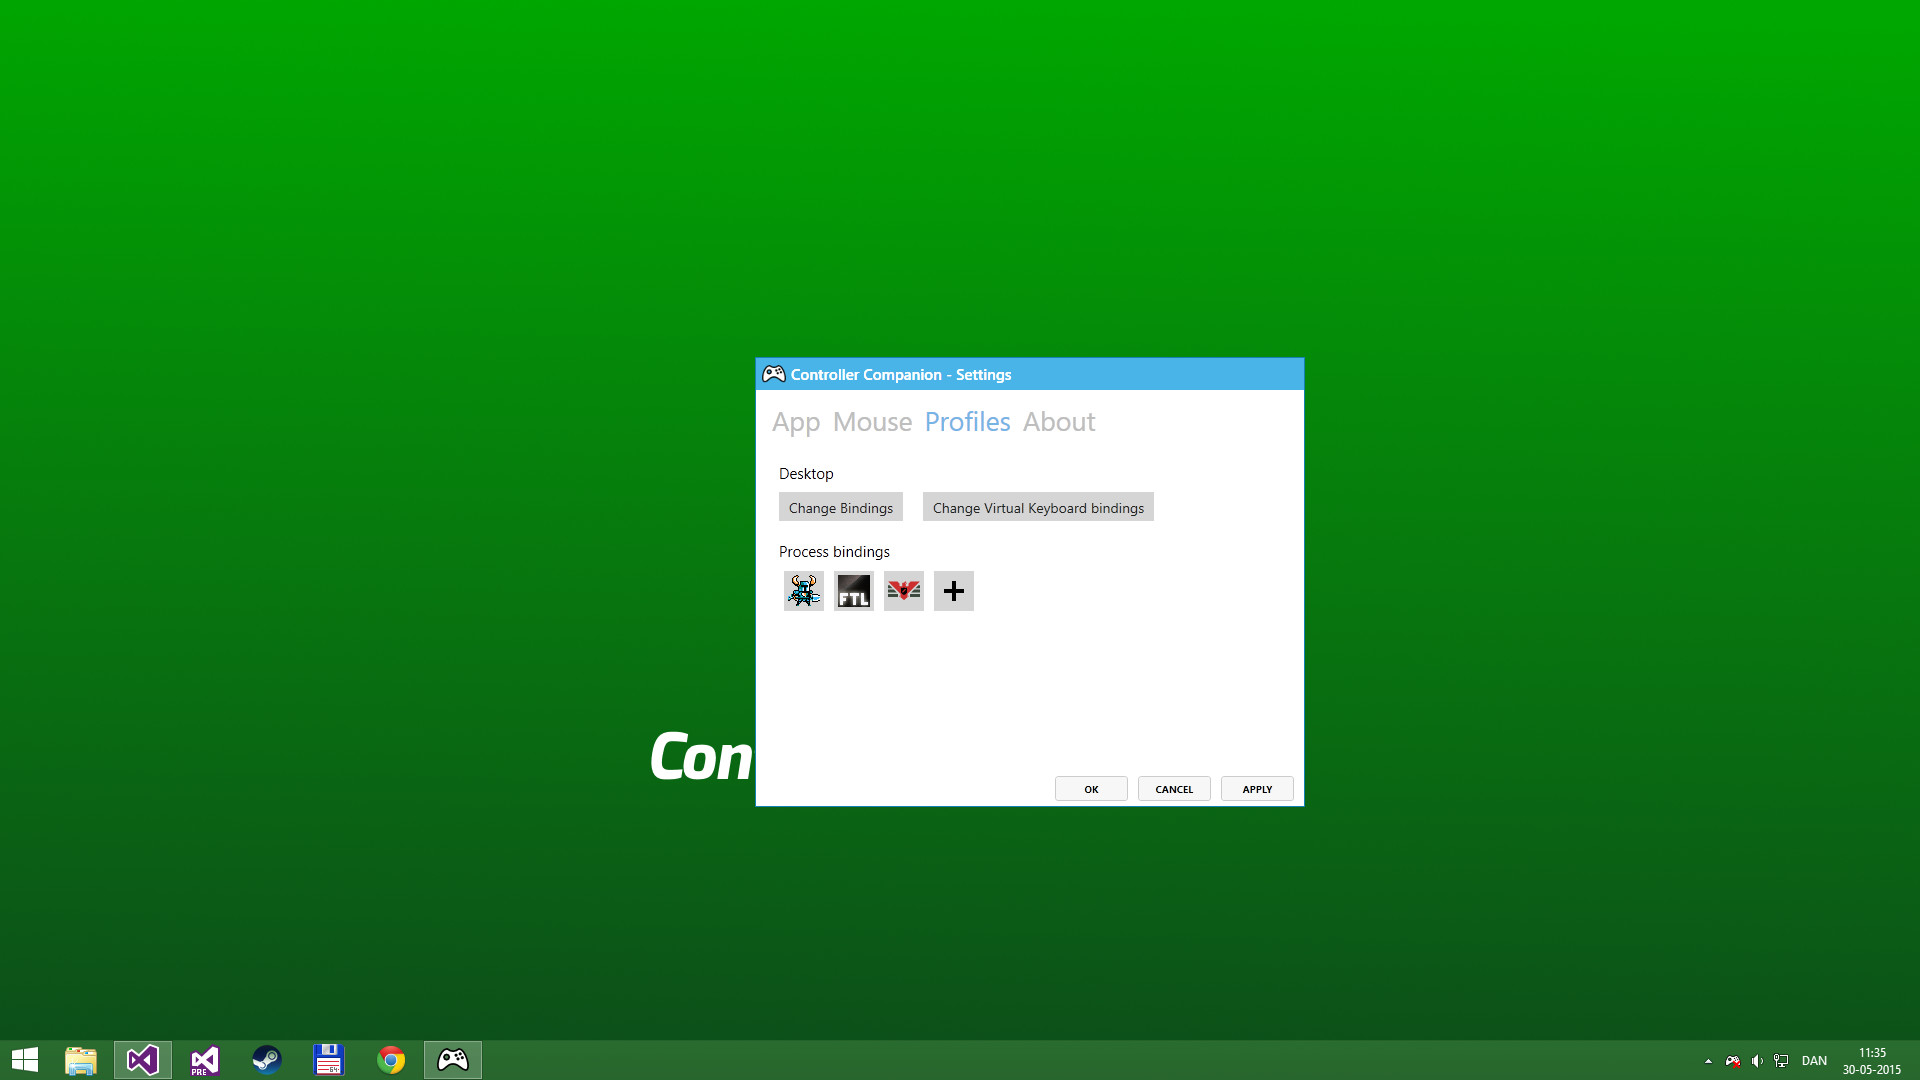 Controller Companion screenshot